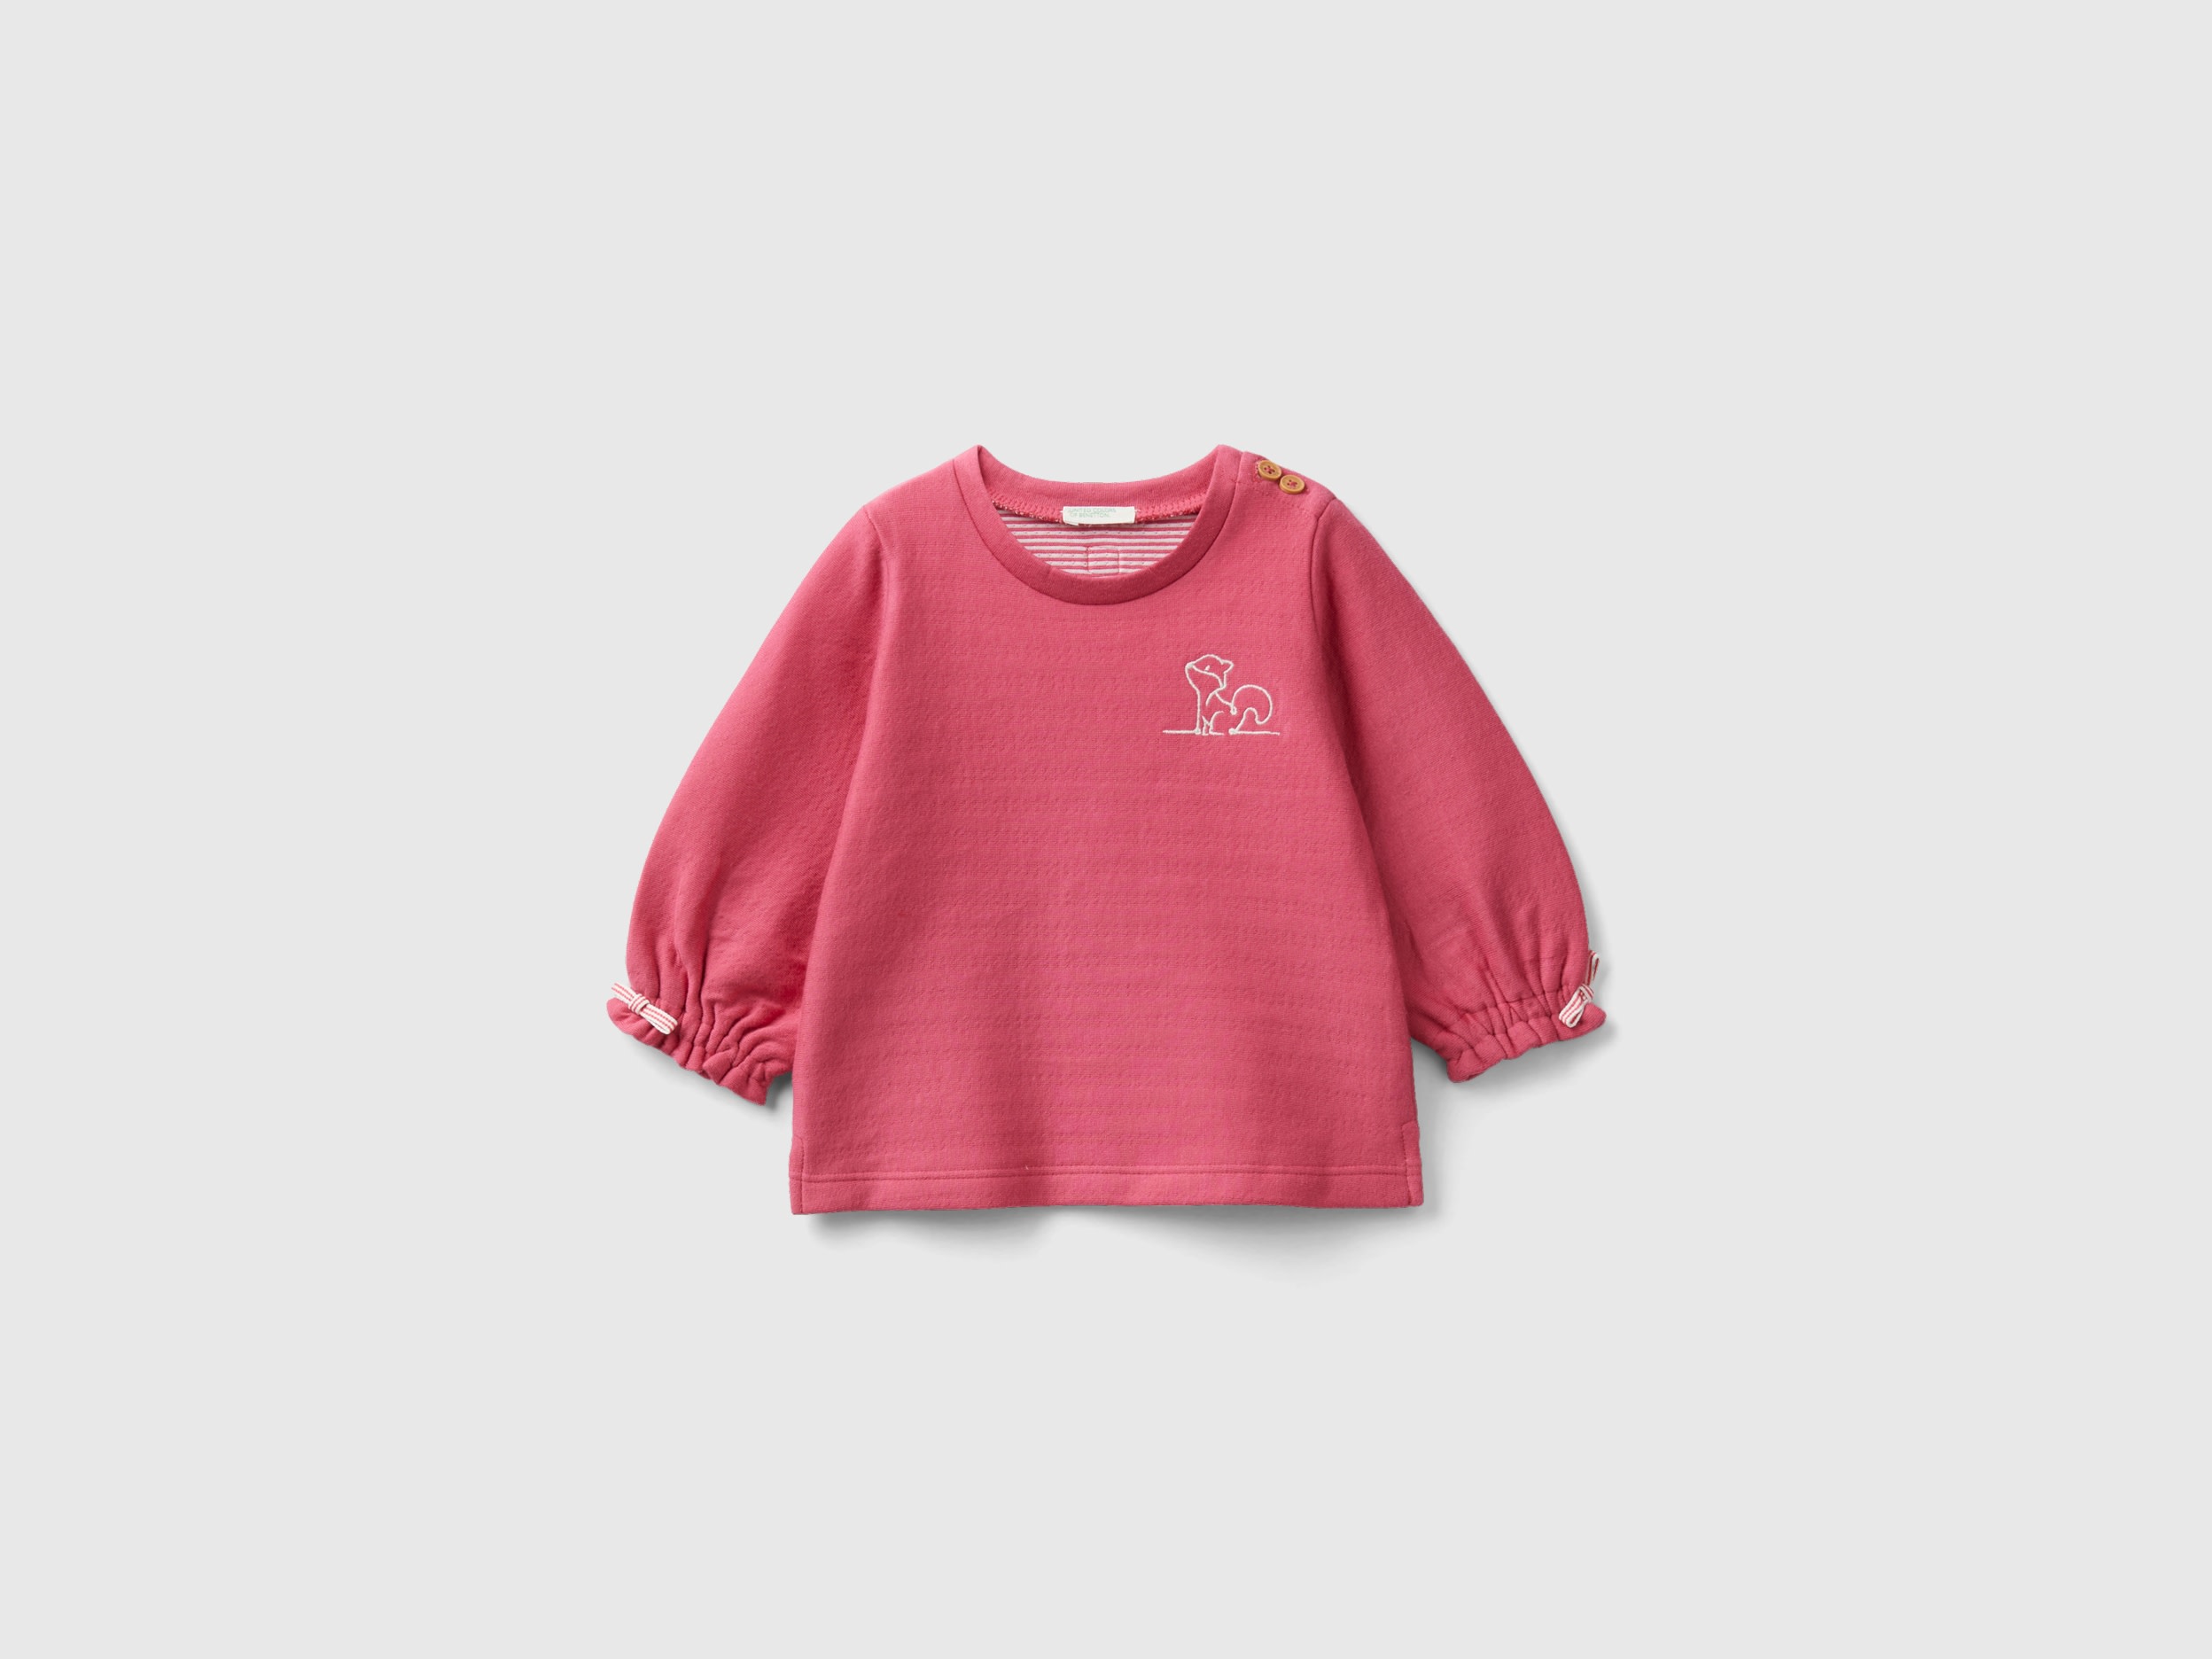 Benetton, Striped Sweatshirt With Embroidery, size 1-3, Salmon, Kids